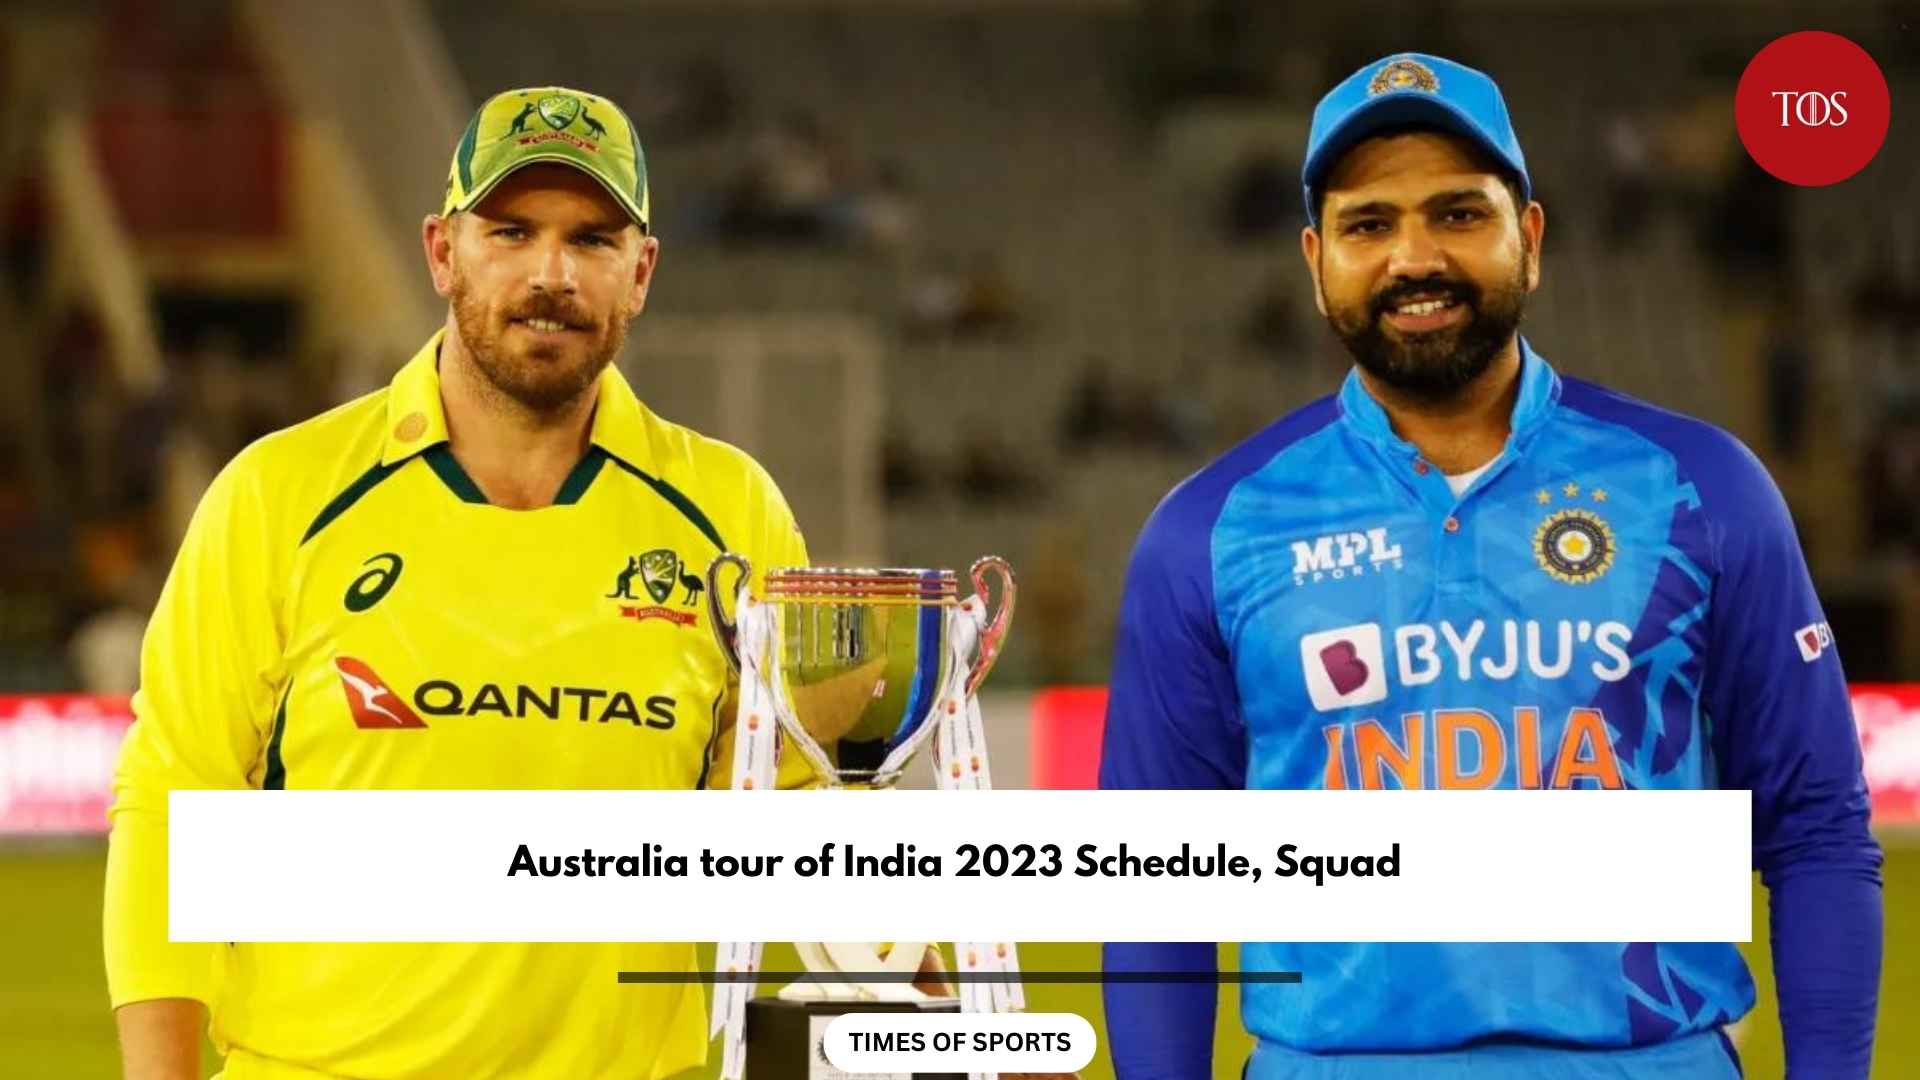 IND vs AUS 2023 Schedule, Squad - CricAngel